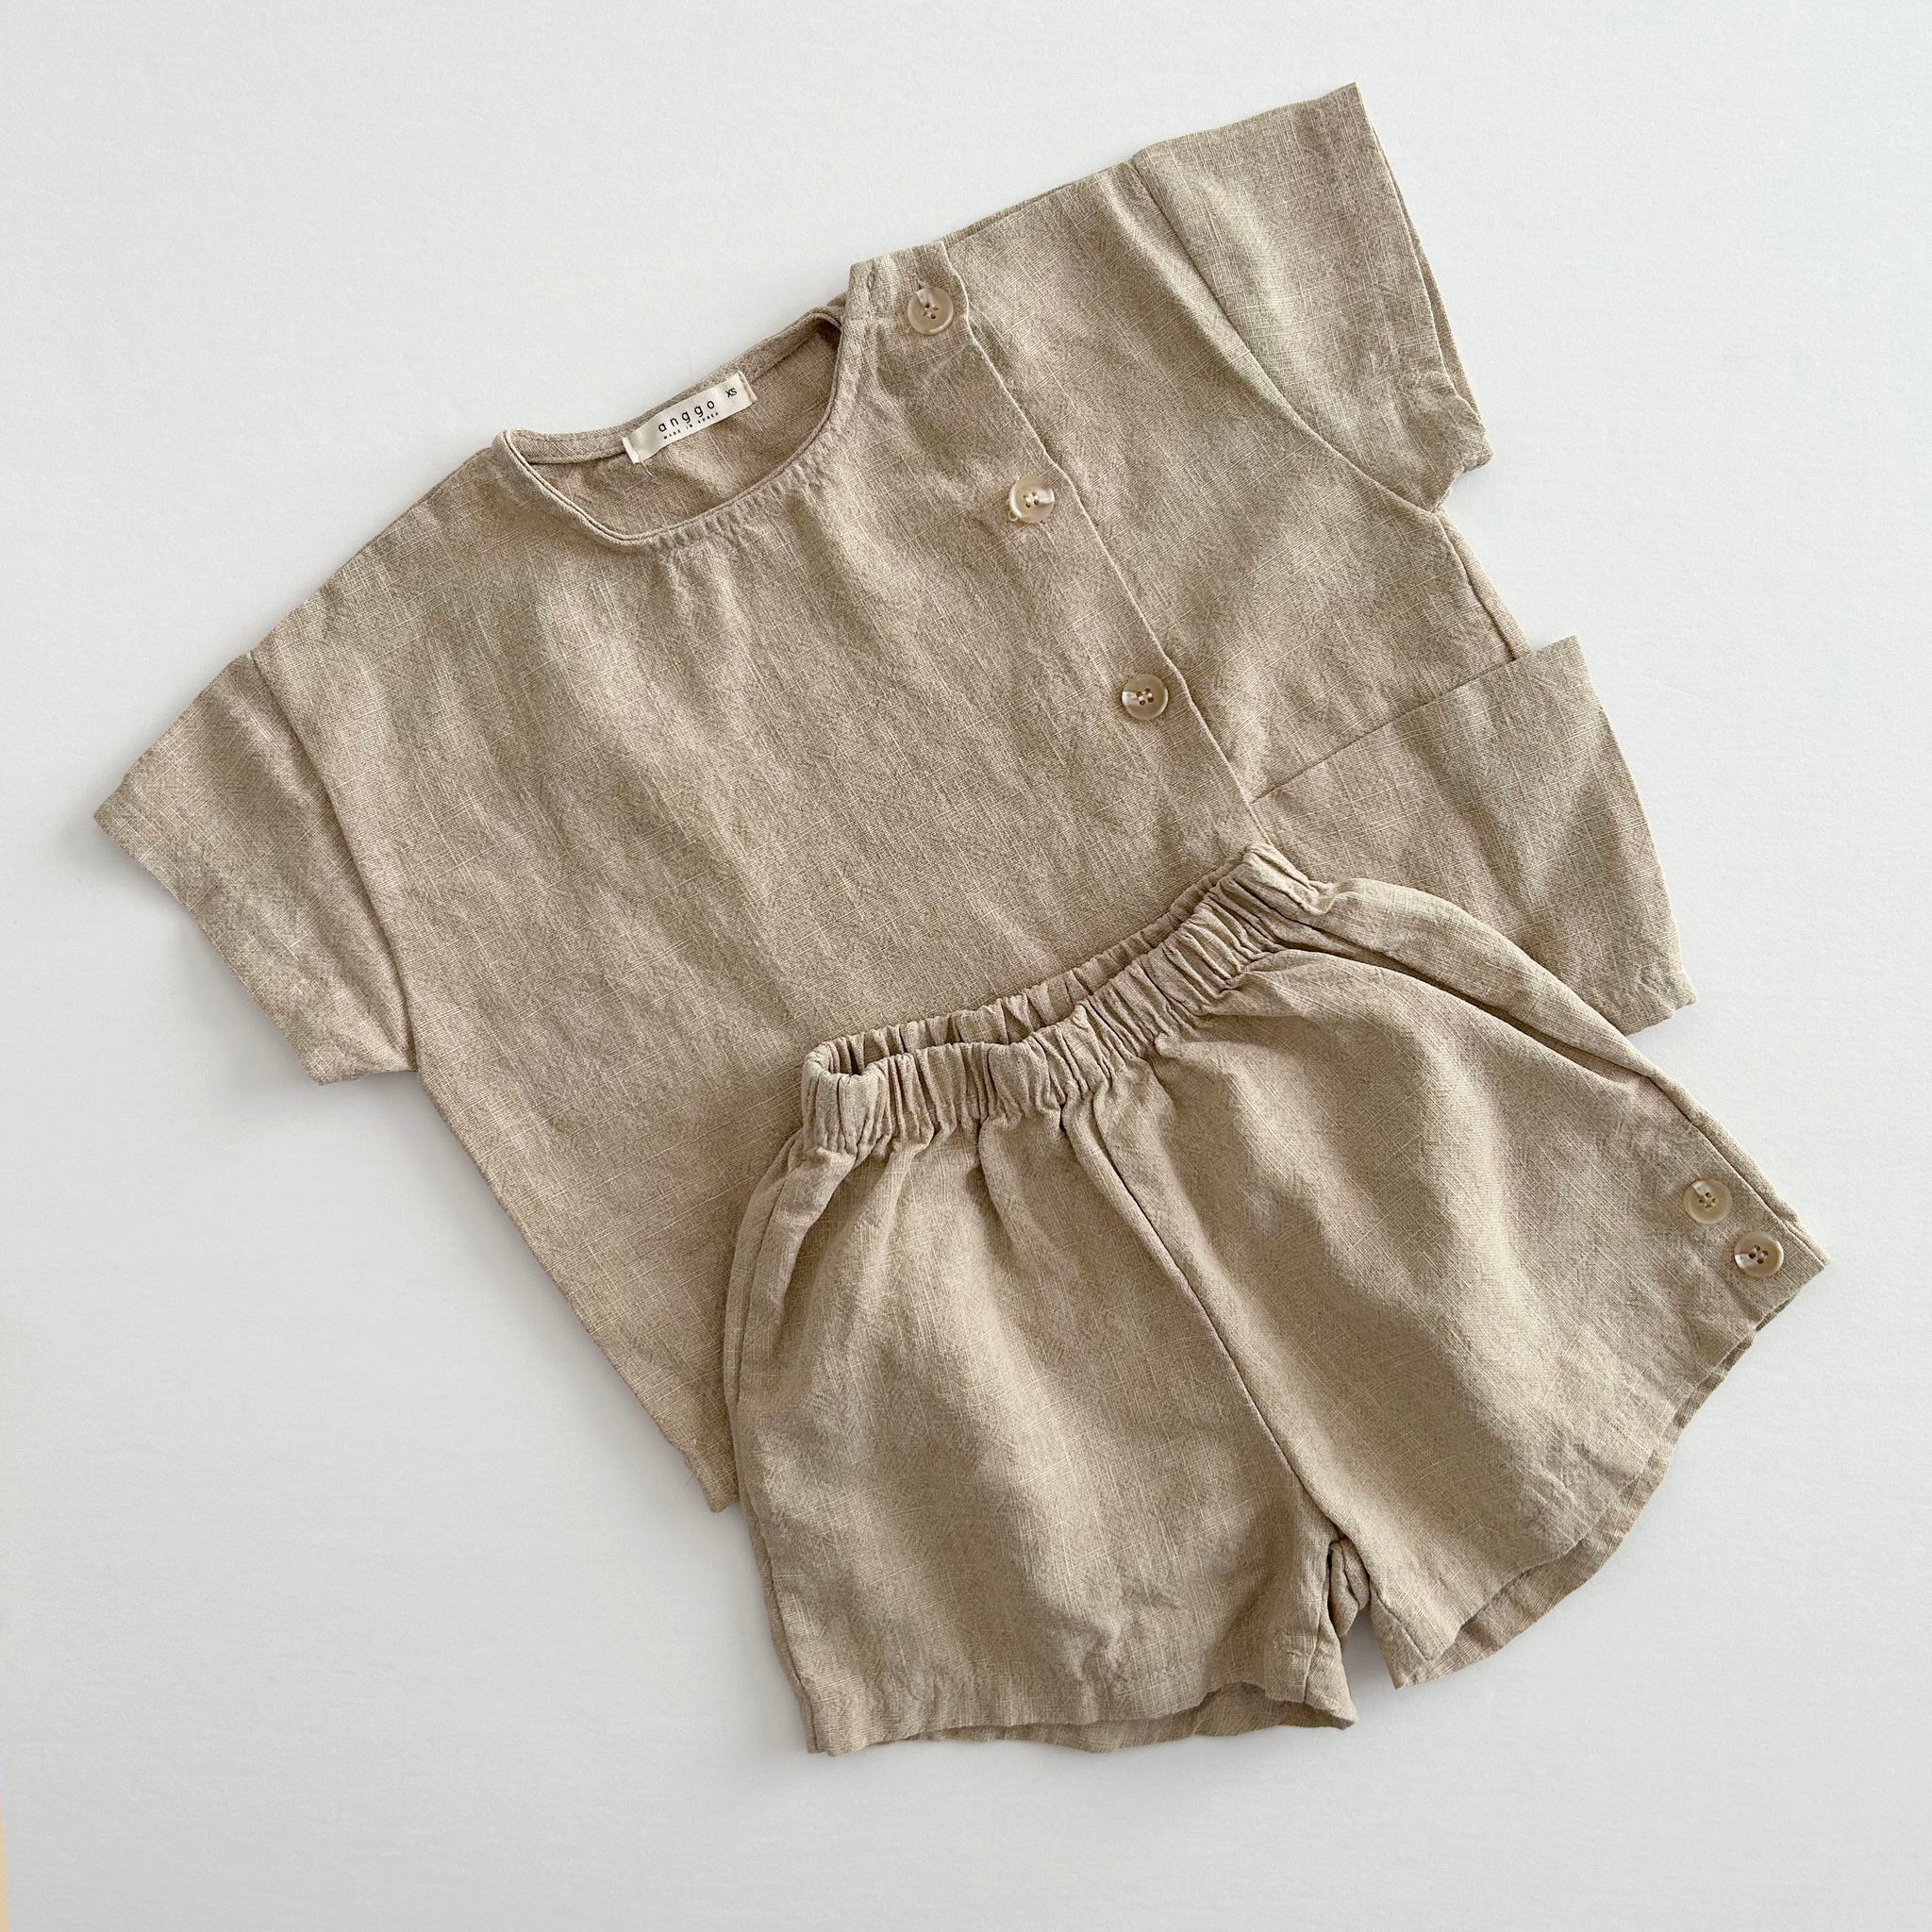 Toddler Anggo Short Sleeve Button Top and Shorts Set (1-5y)